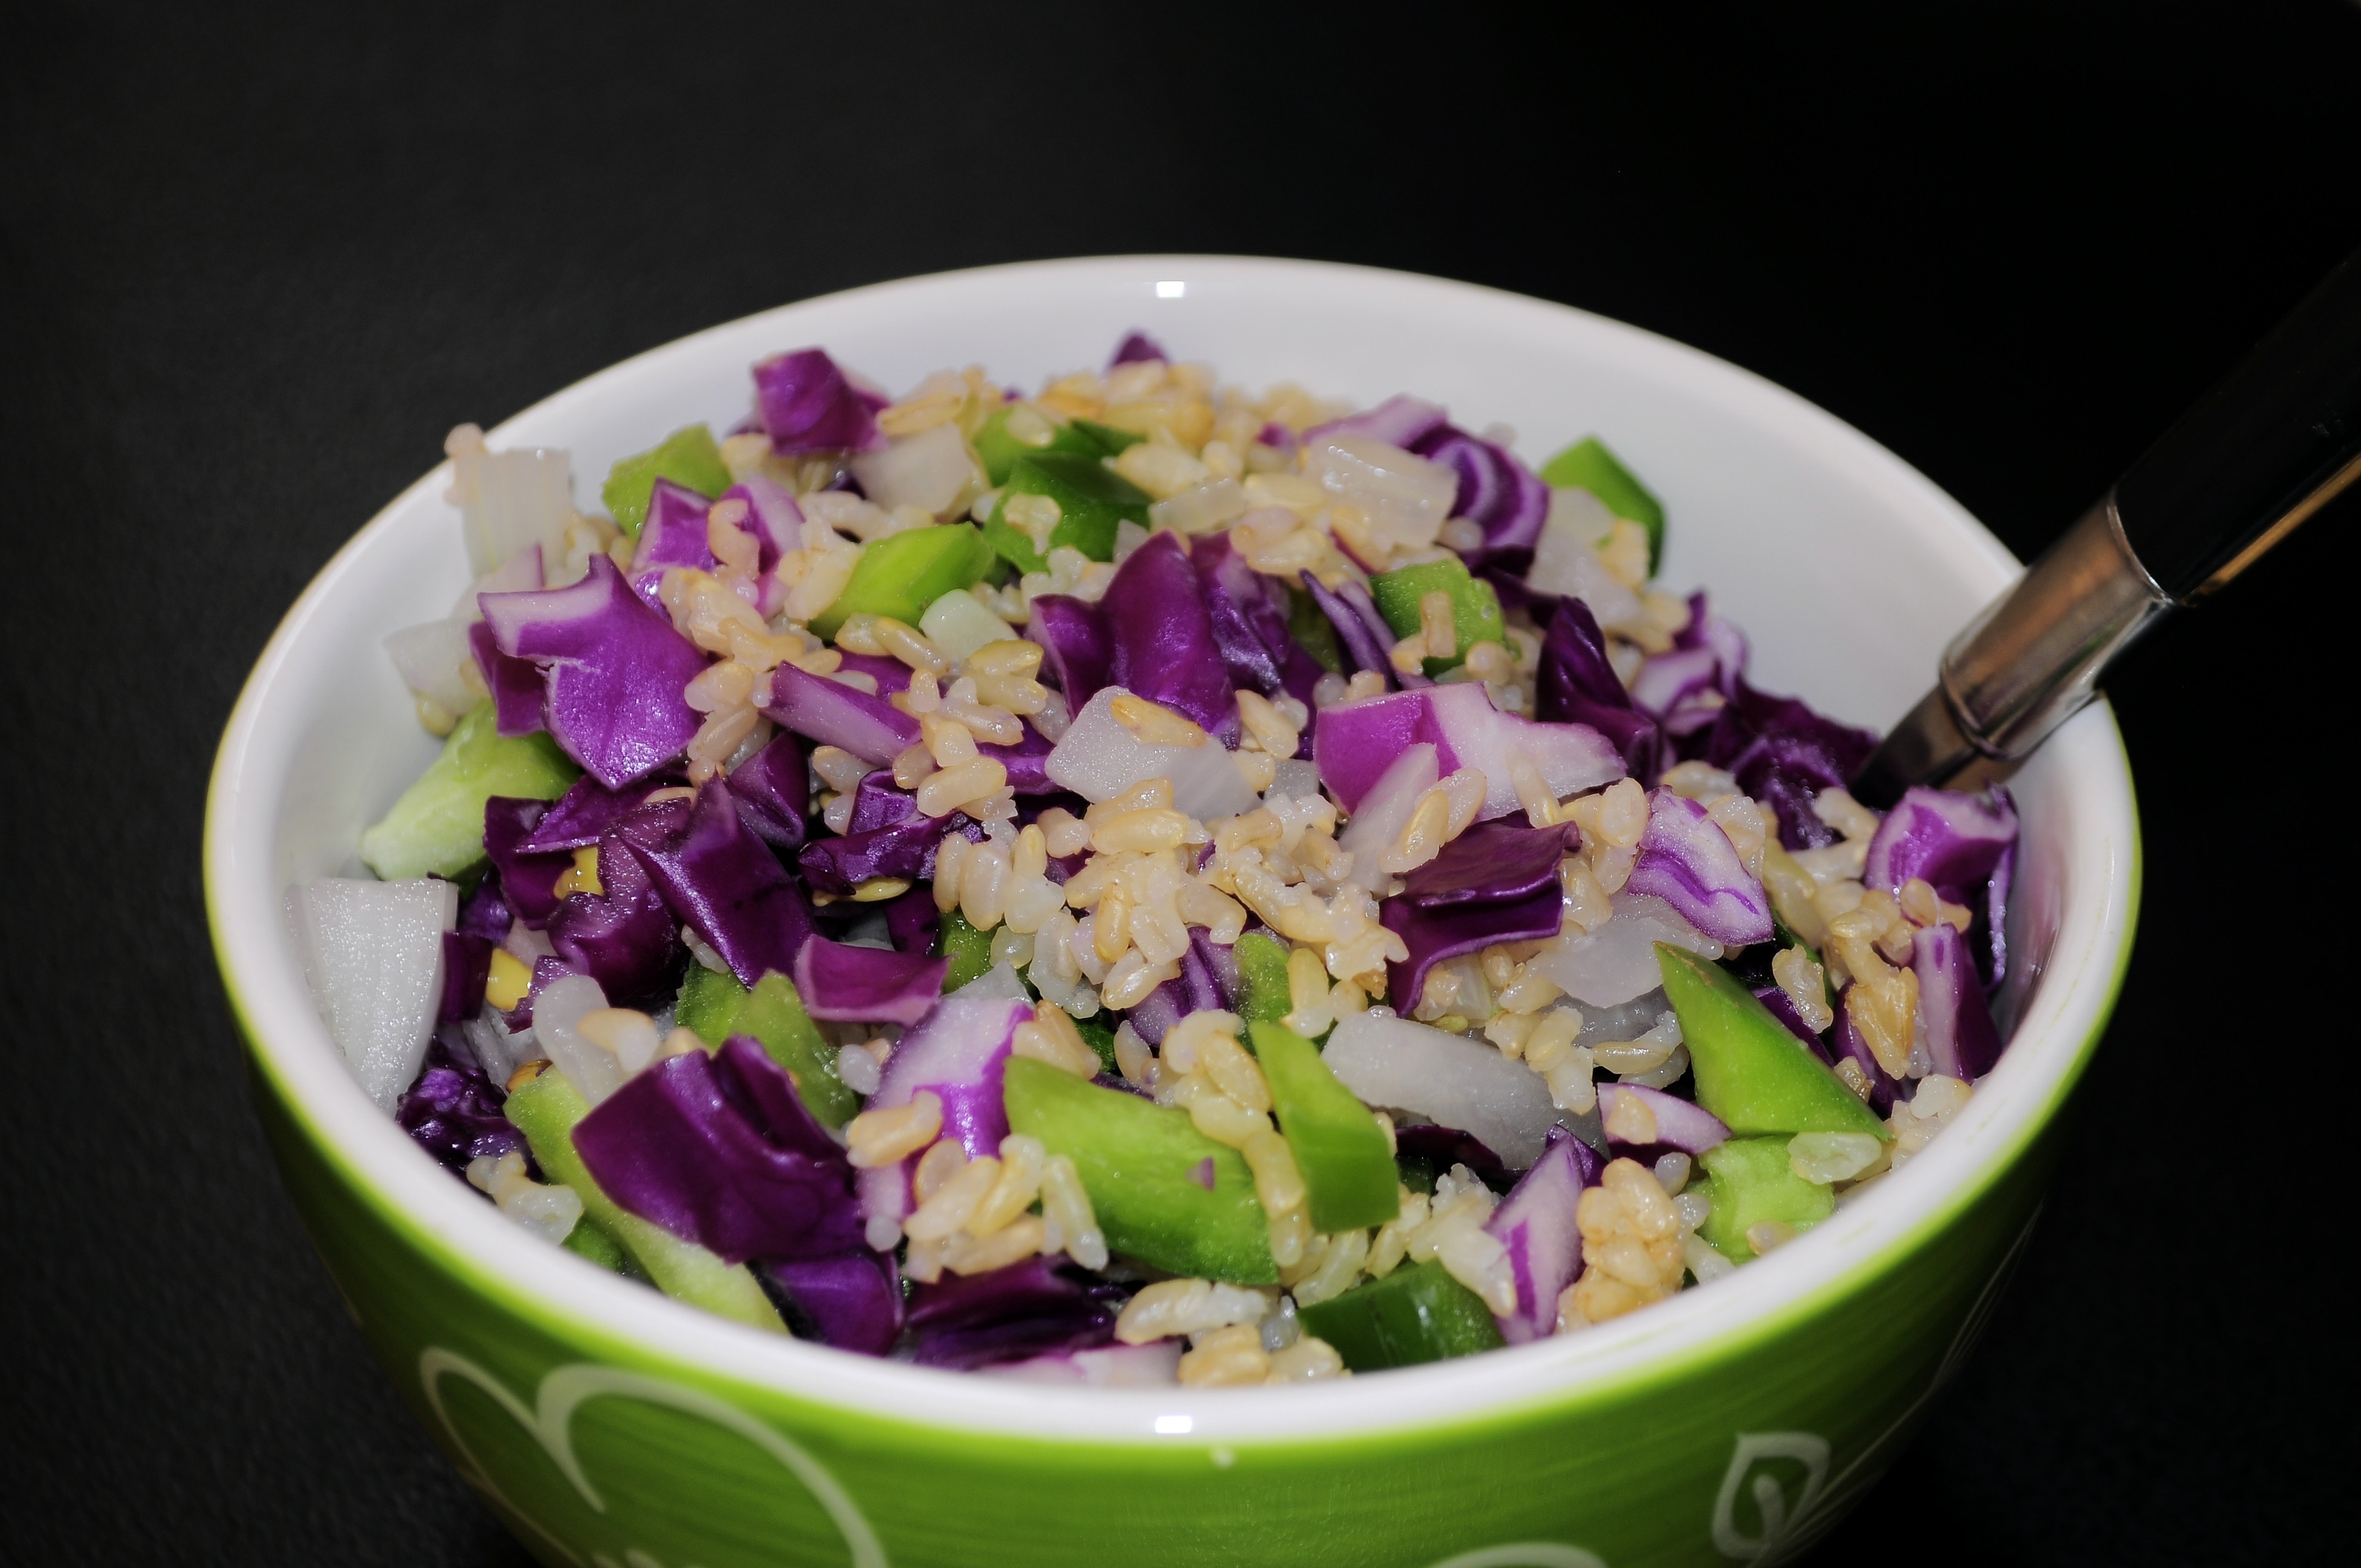 salad and green ceramic bowl